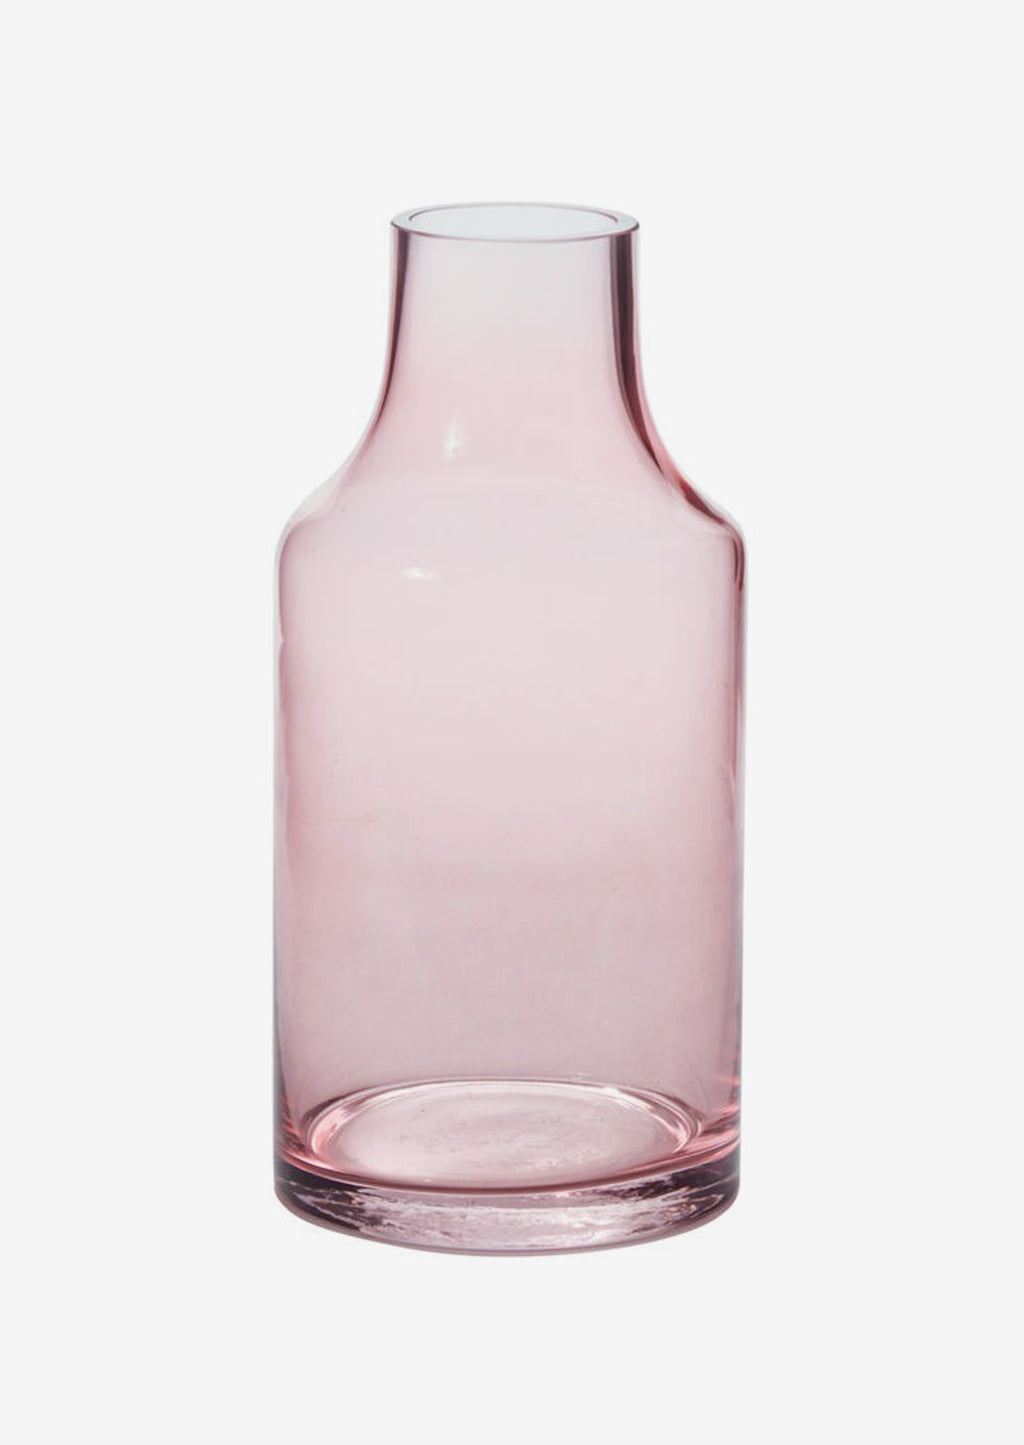 3: Color Tint Glass Vase